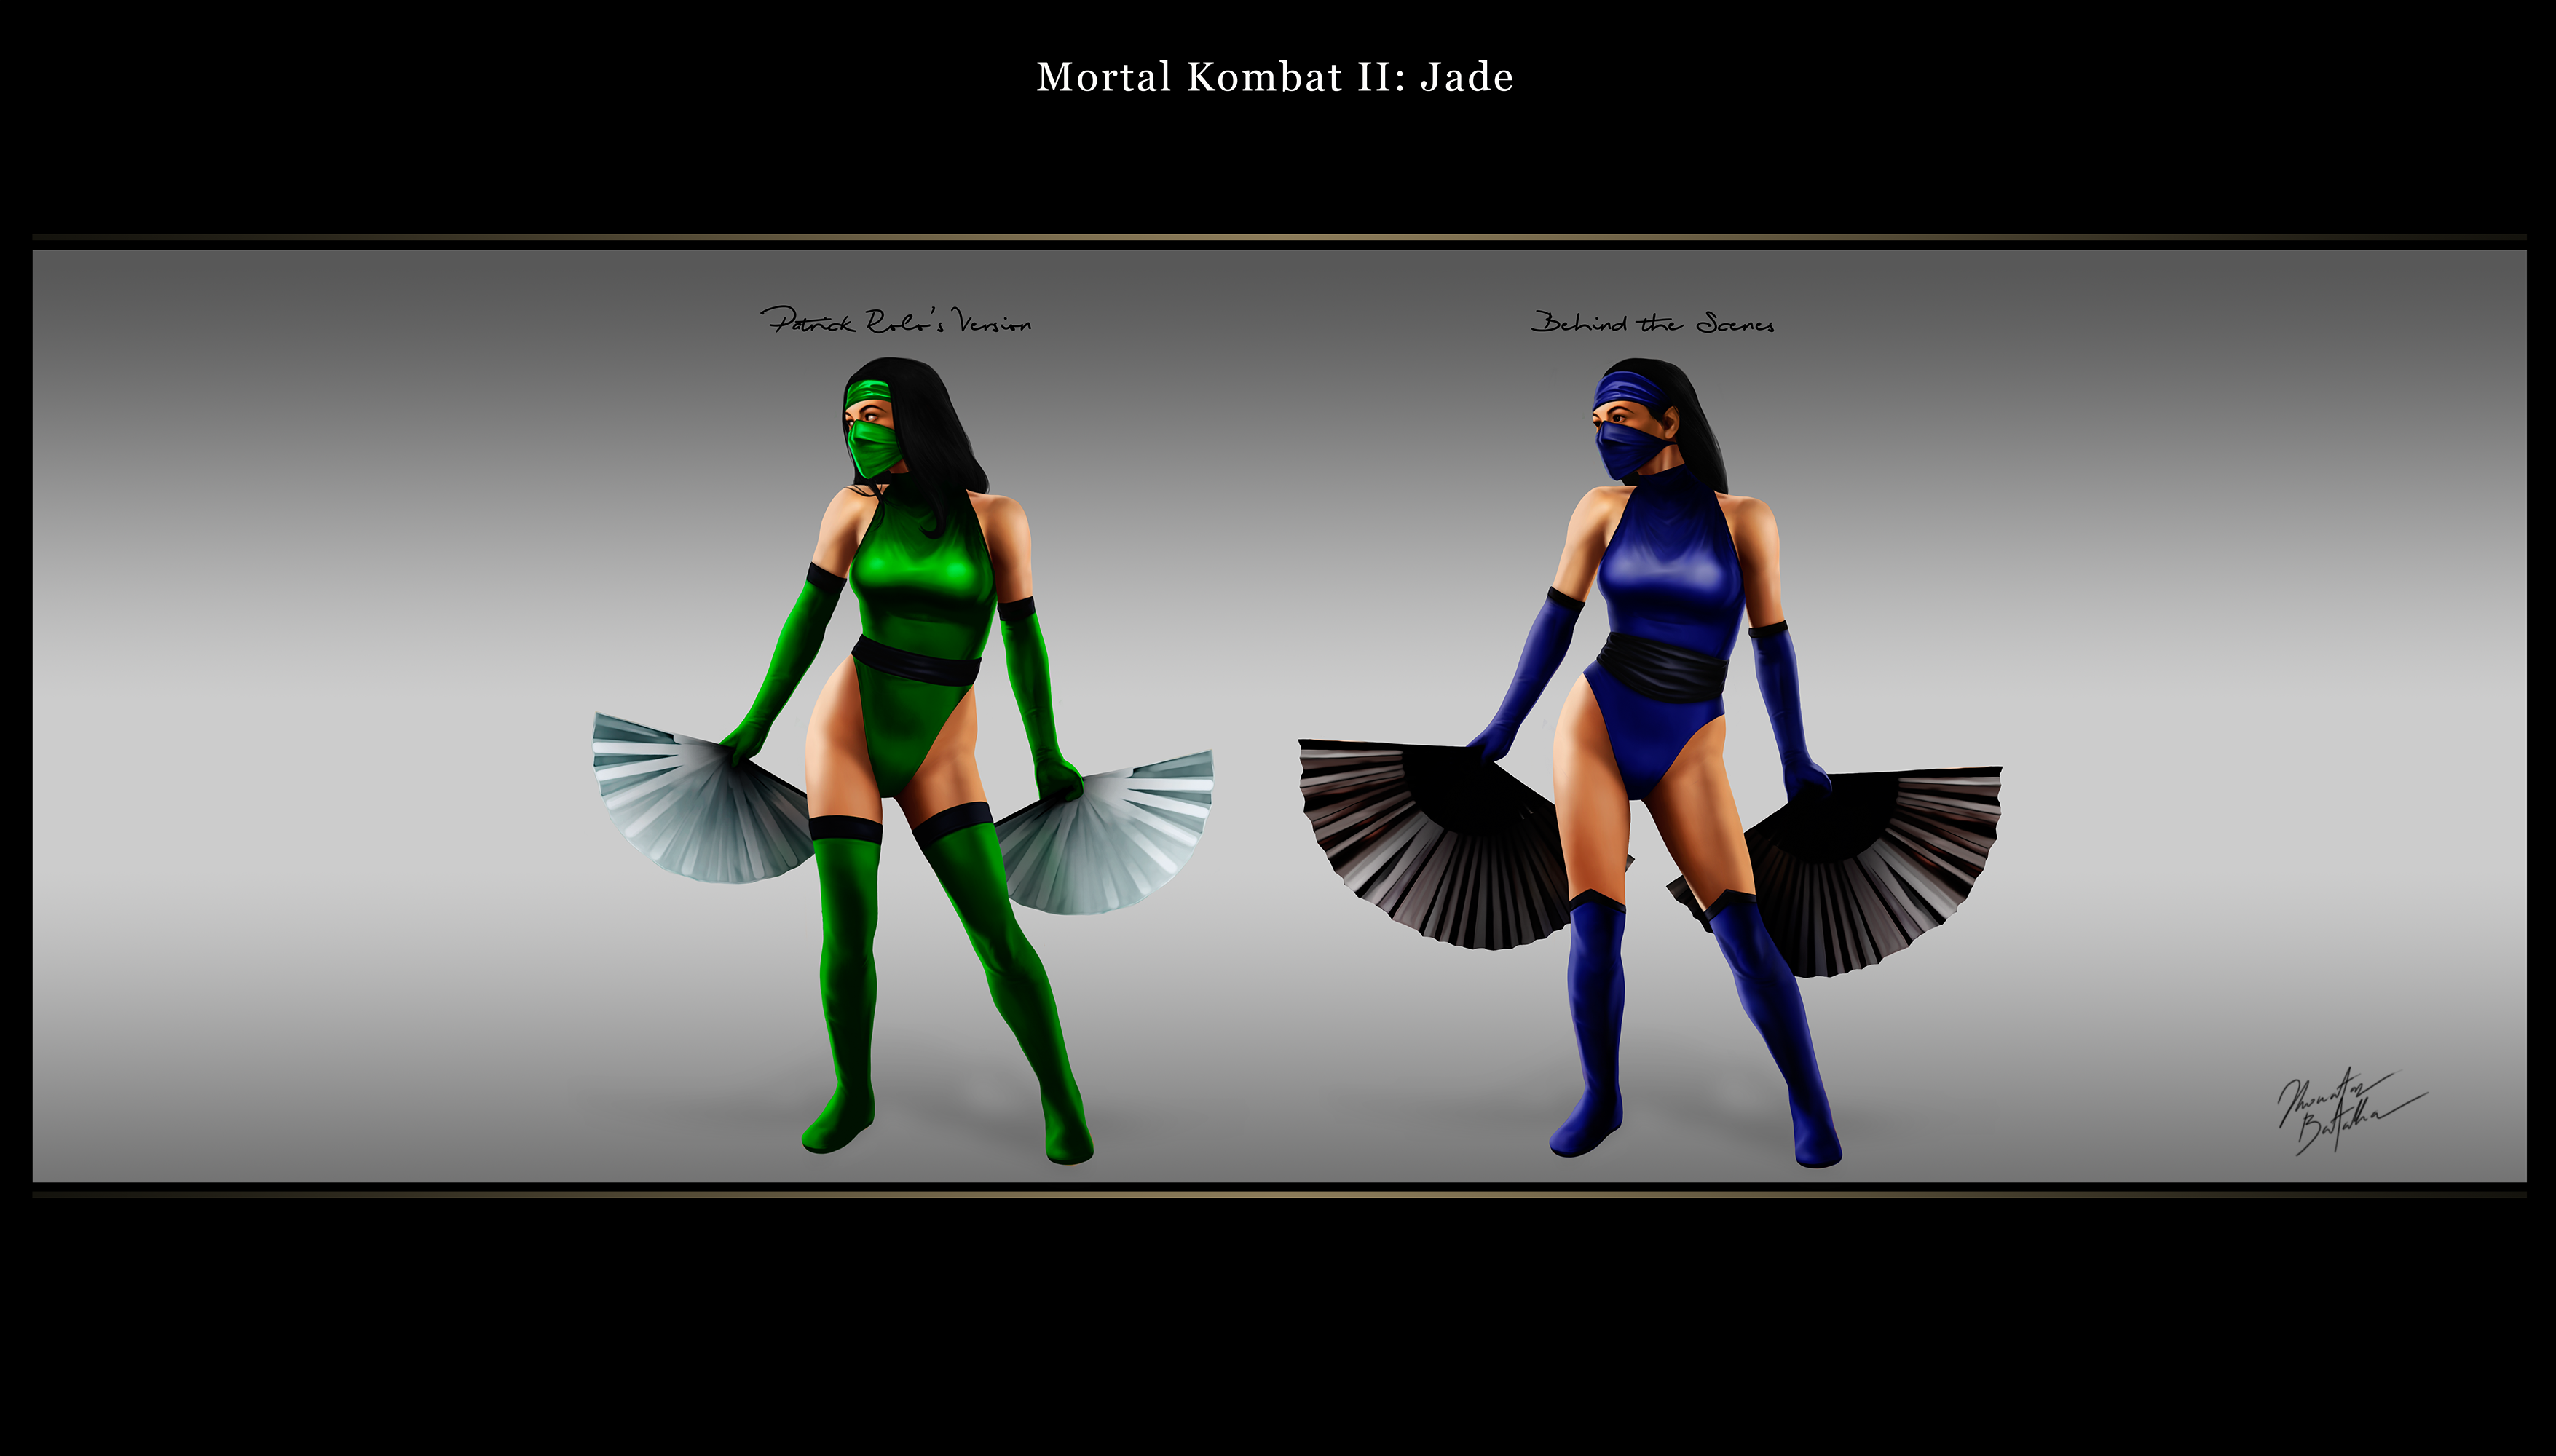 Ultimate Mortal Kombat 3 - Kitana by JhonatasBatalha on DeviantArt